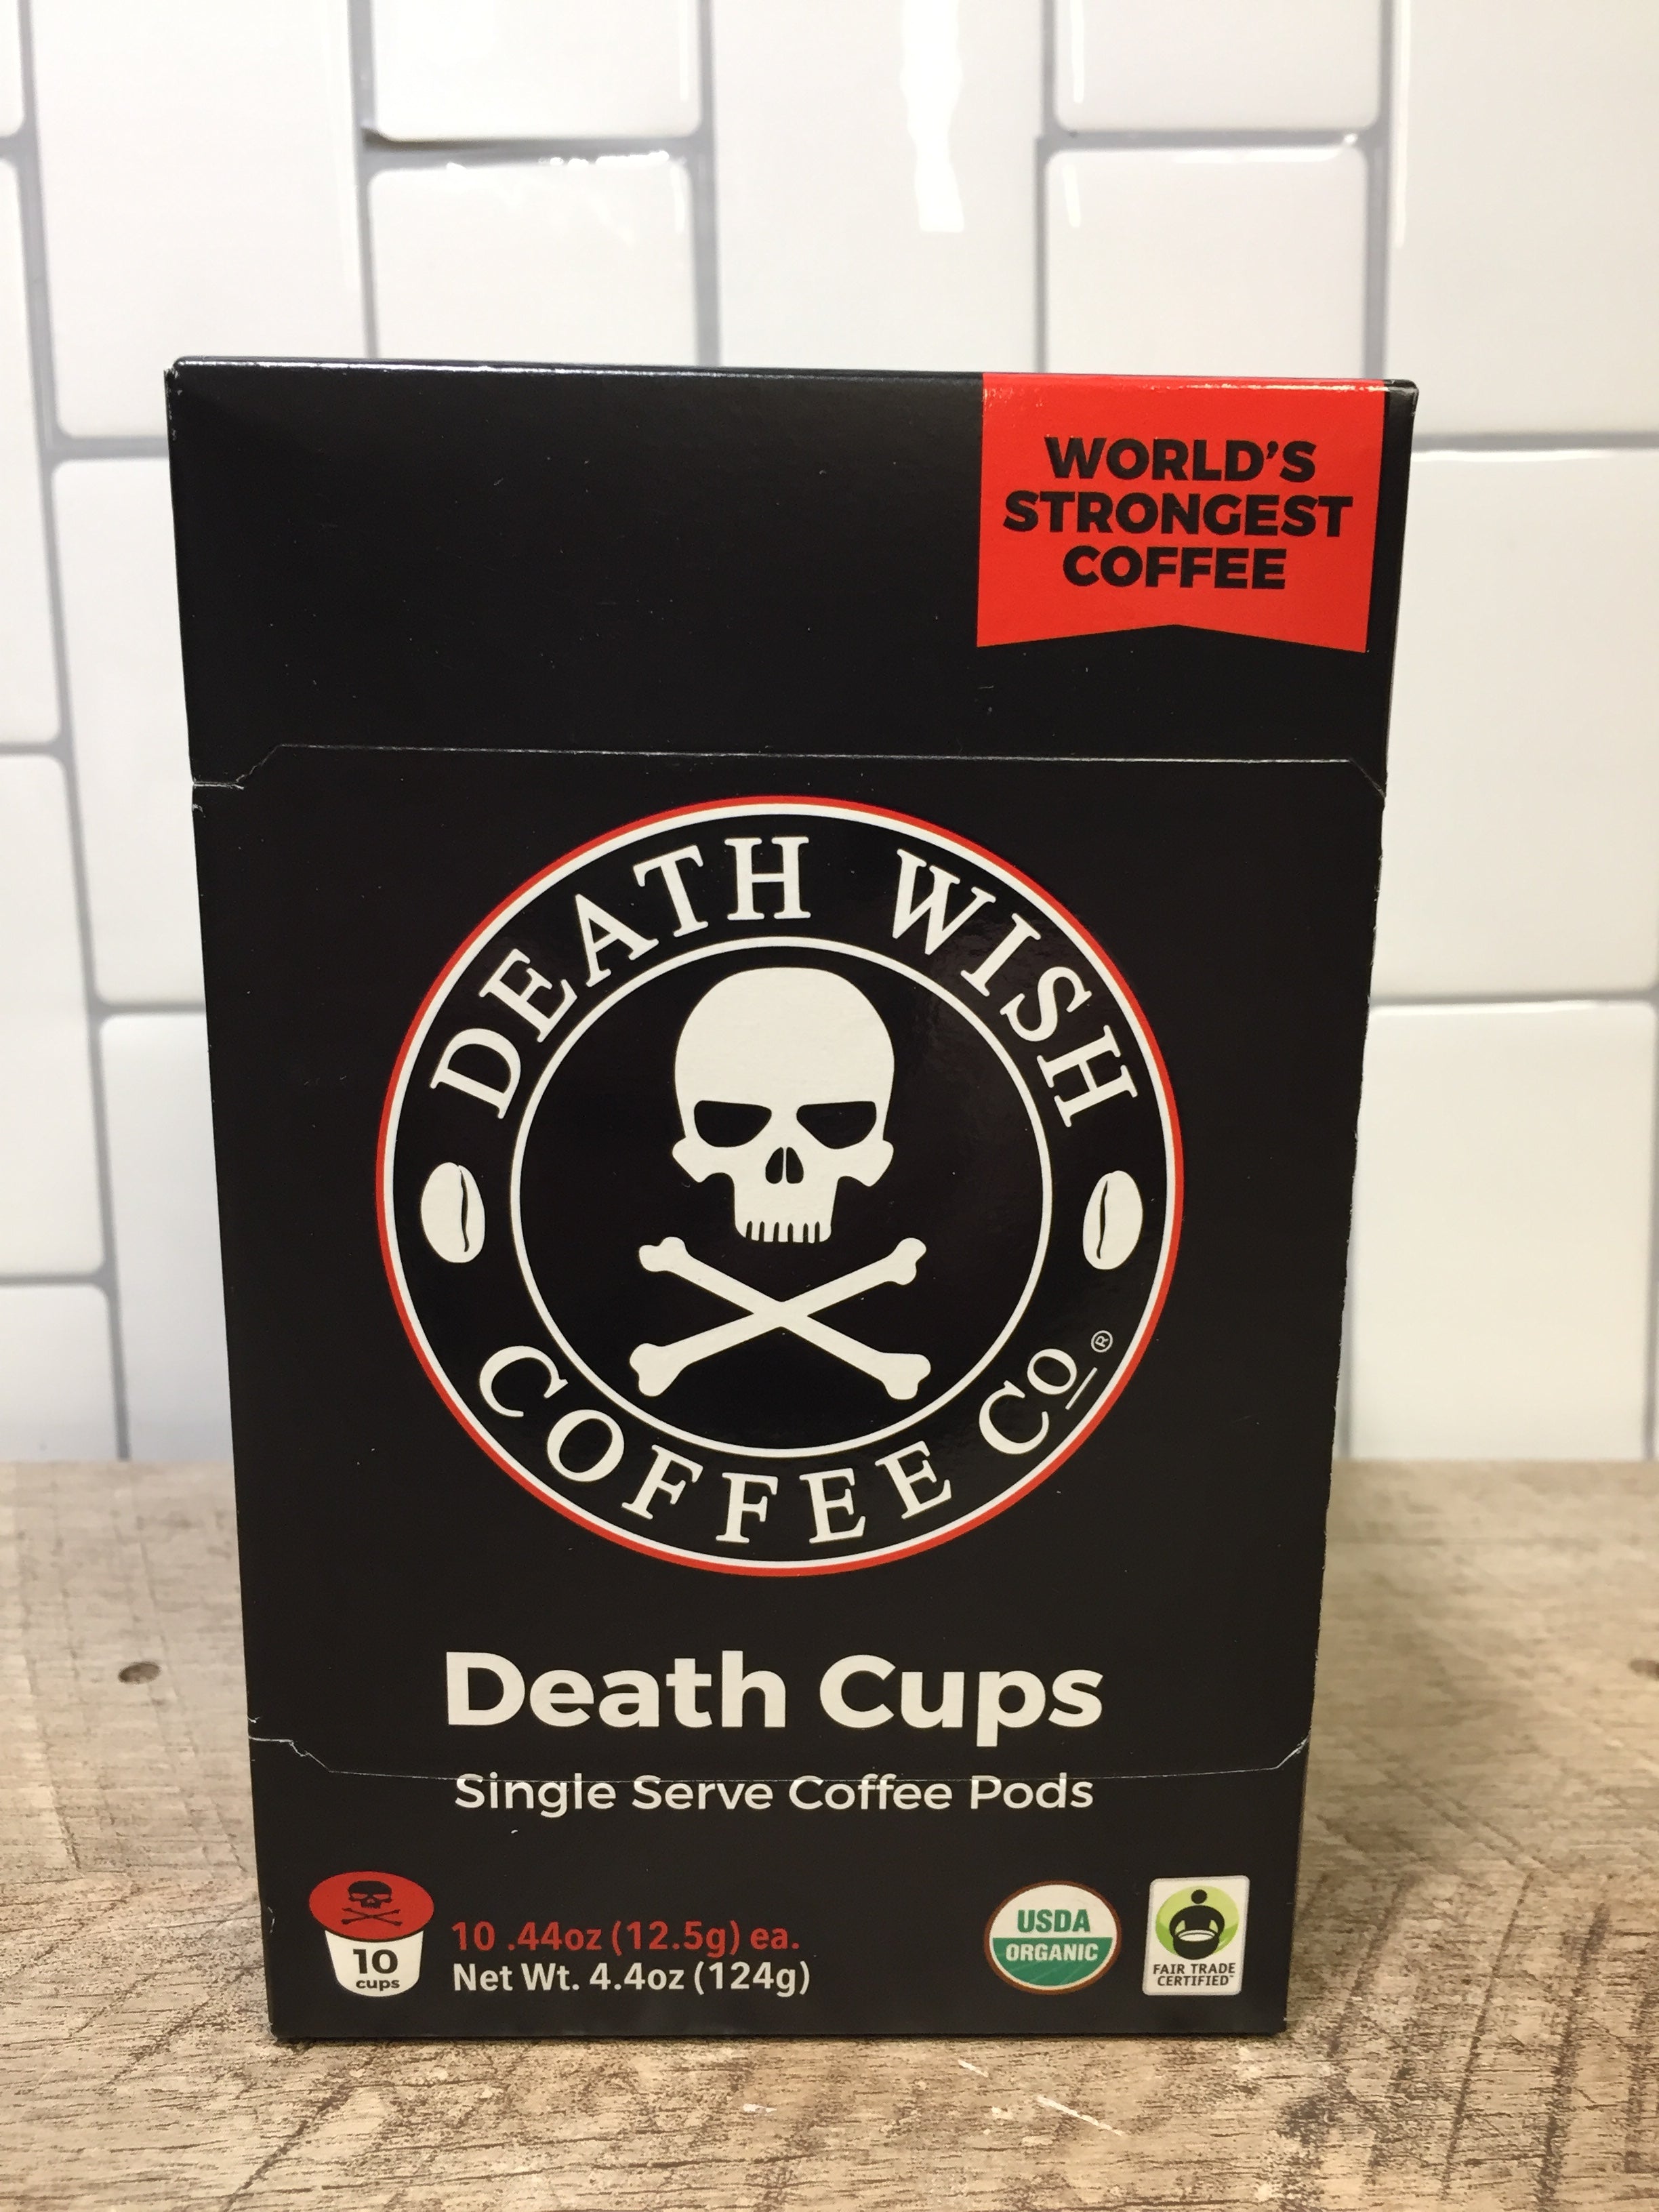 Death Wish Coffee - Dark Roast World's Strongest Coffee Organic K-cups 10 Count (7010820260023)